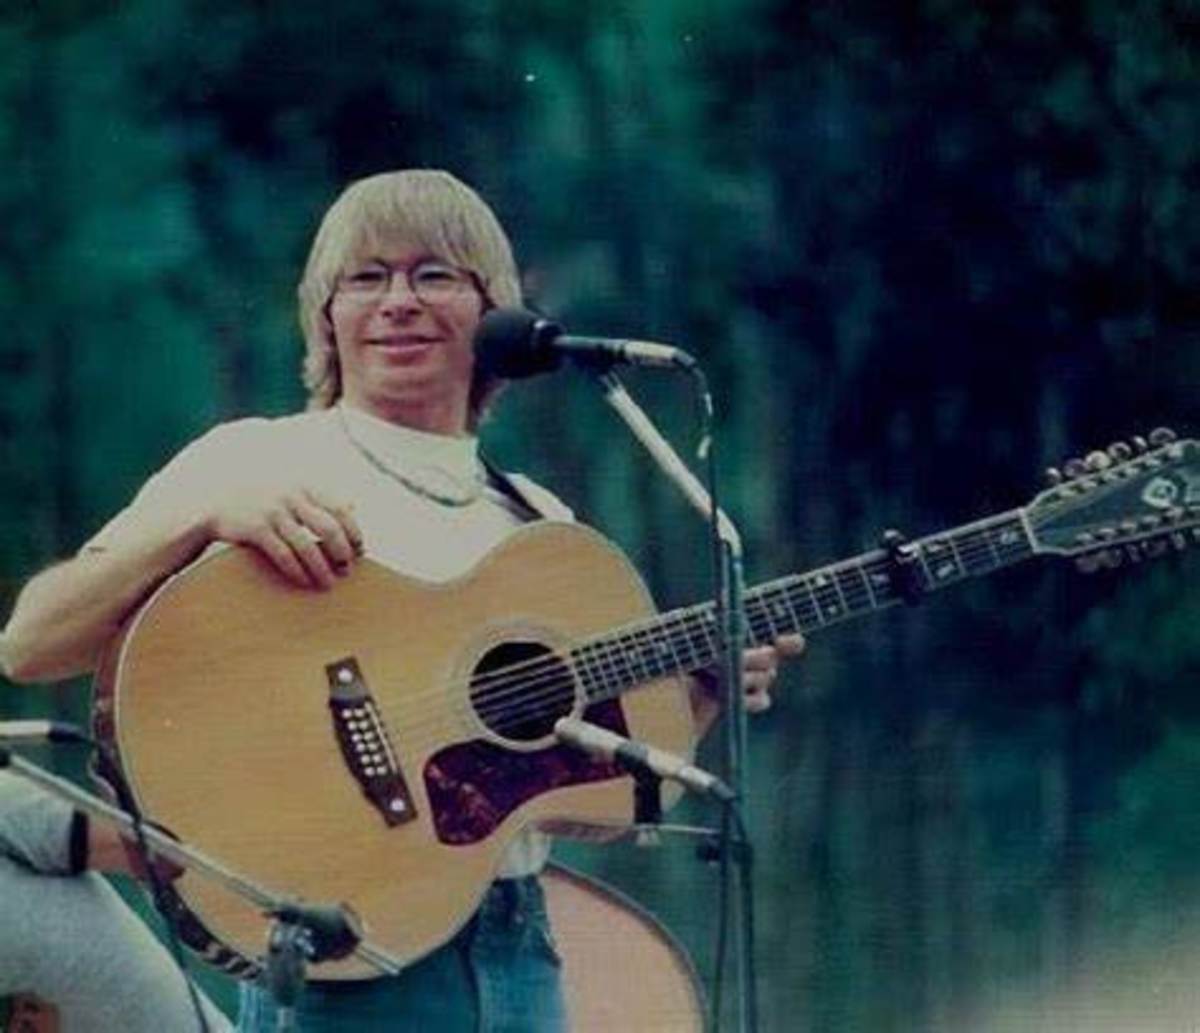 An Old Oklahoma Guitar: John Denver